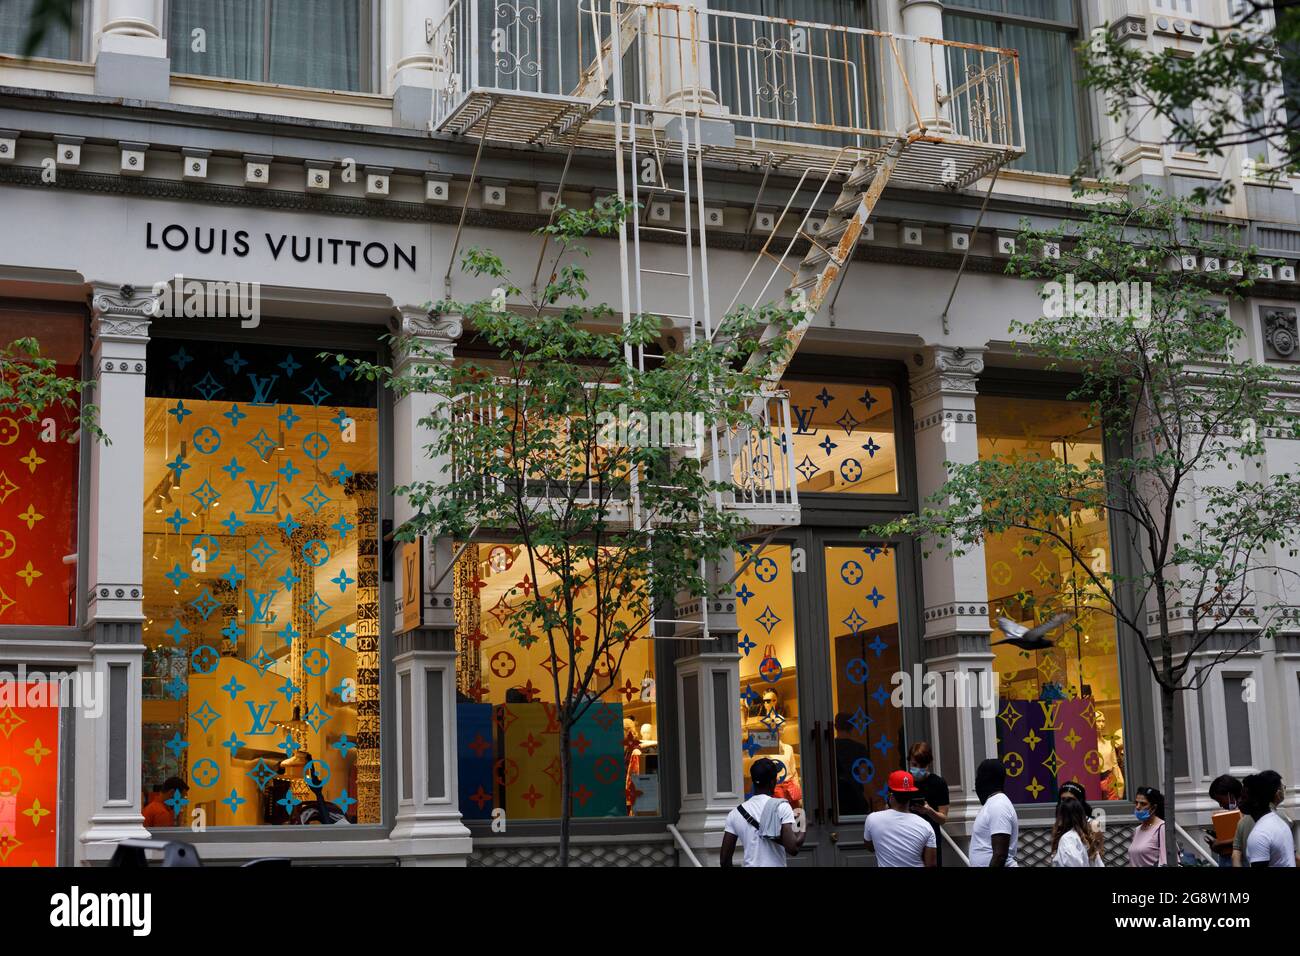 Louis Vuitton store in SoHo neighborhood of Manhattan, New York